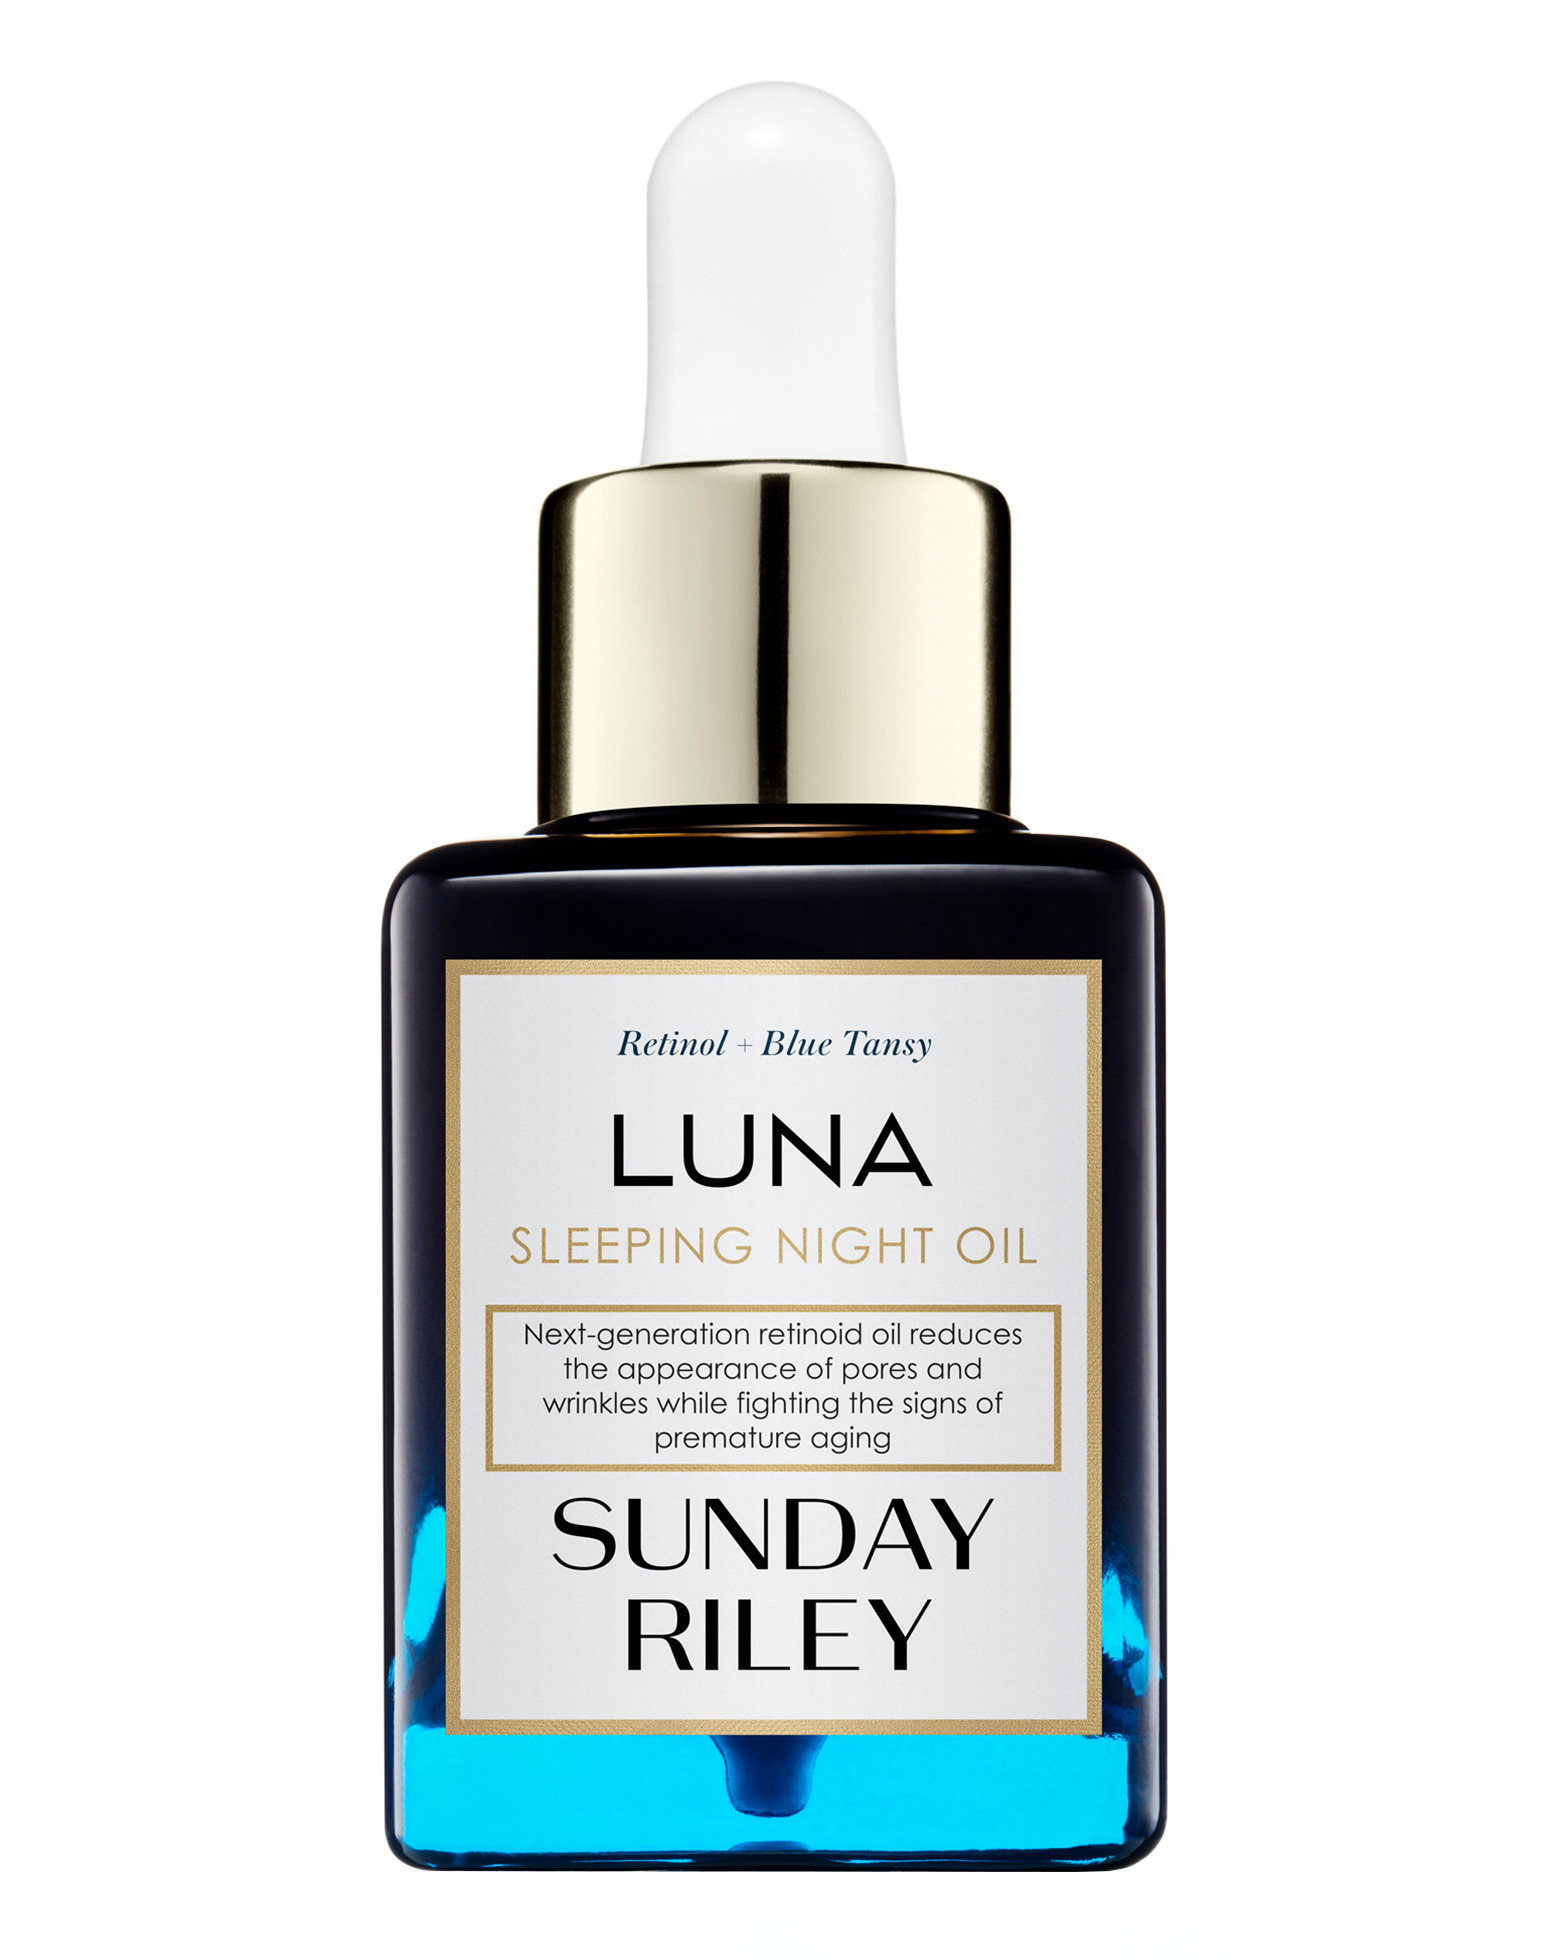 Sunday Riley Sleeping oil